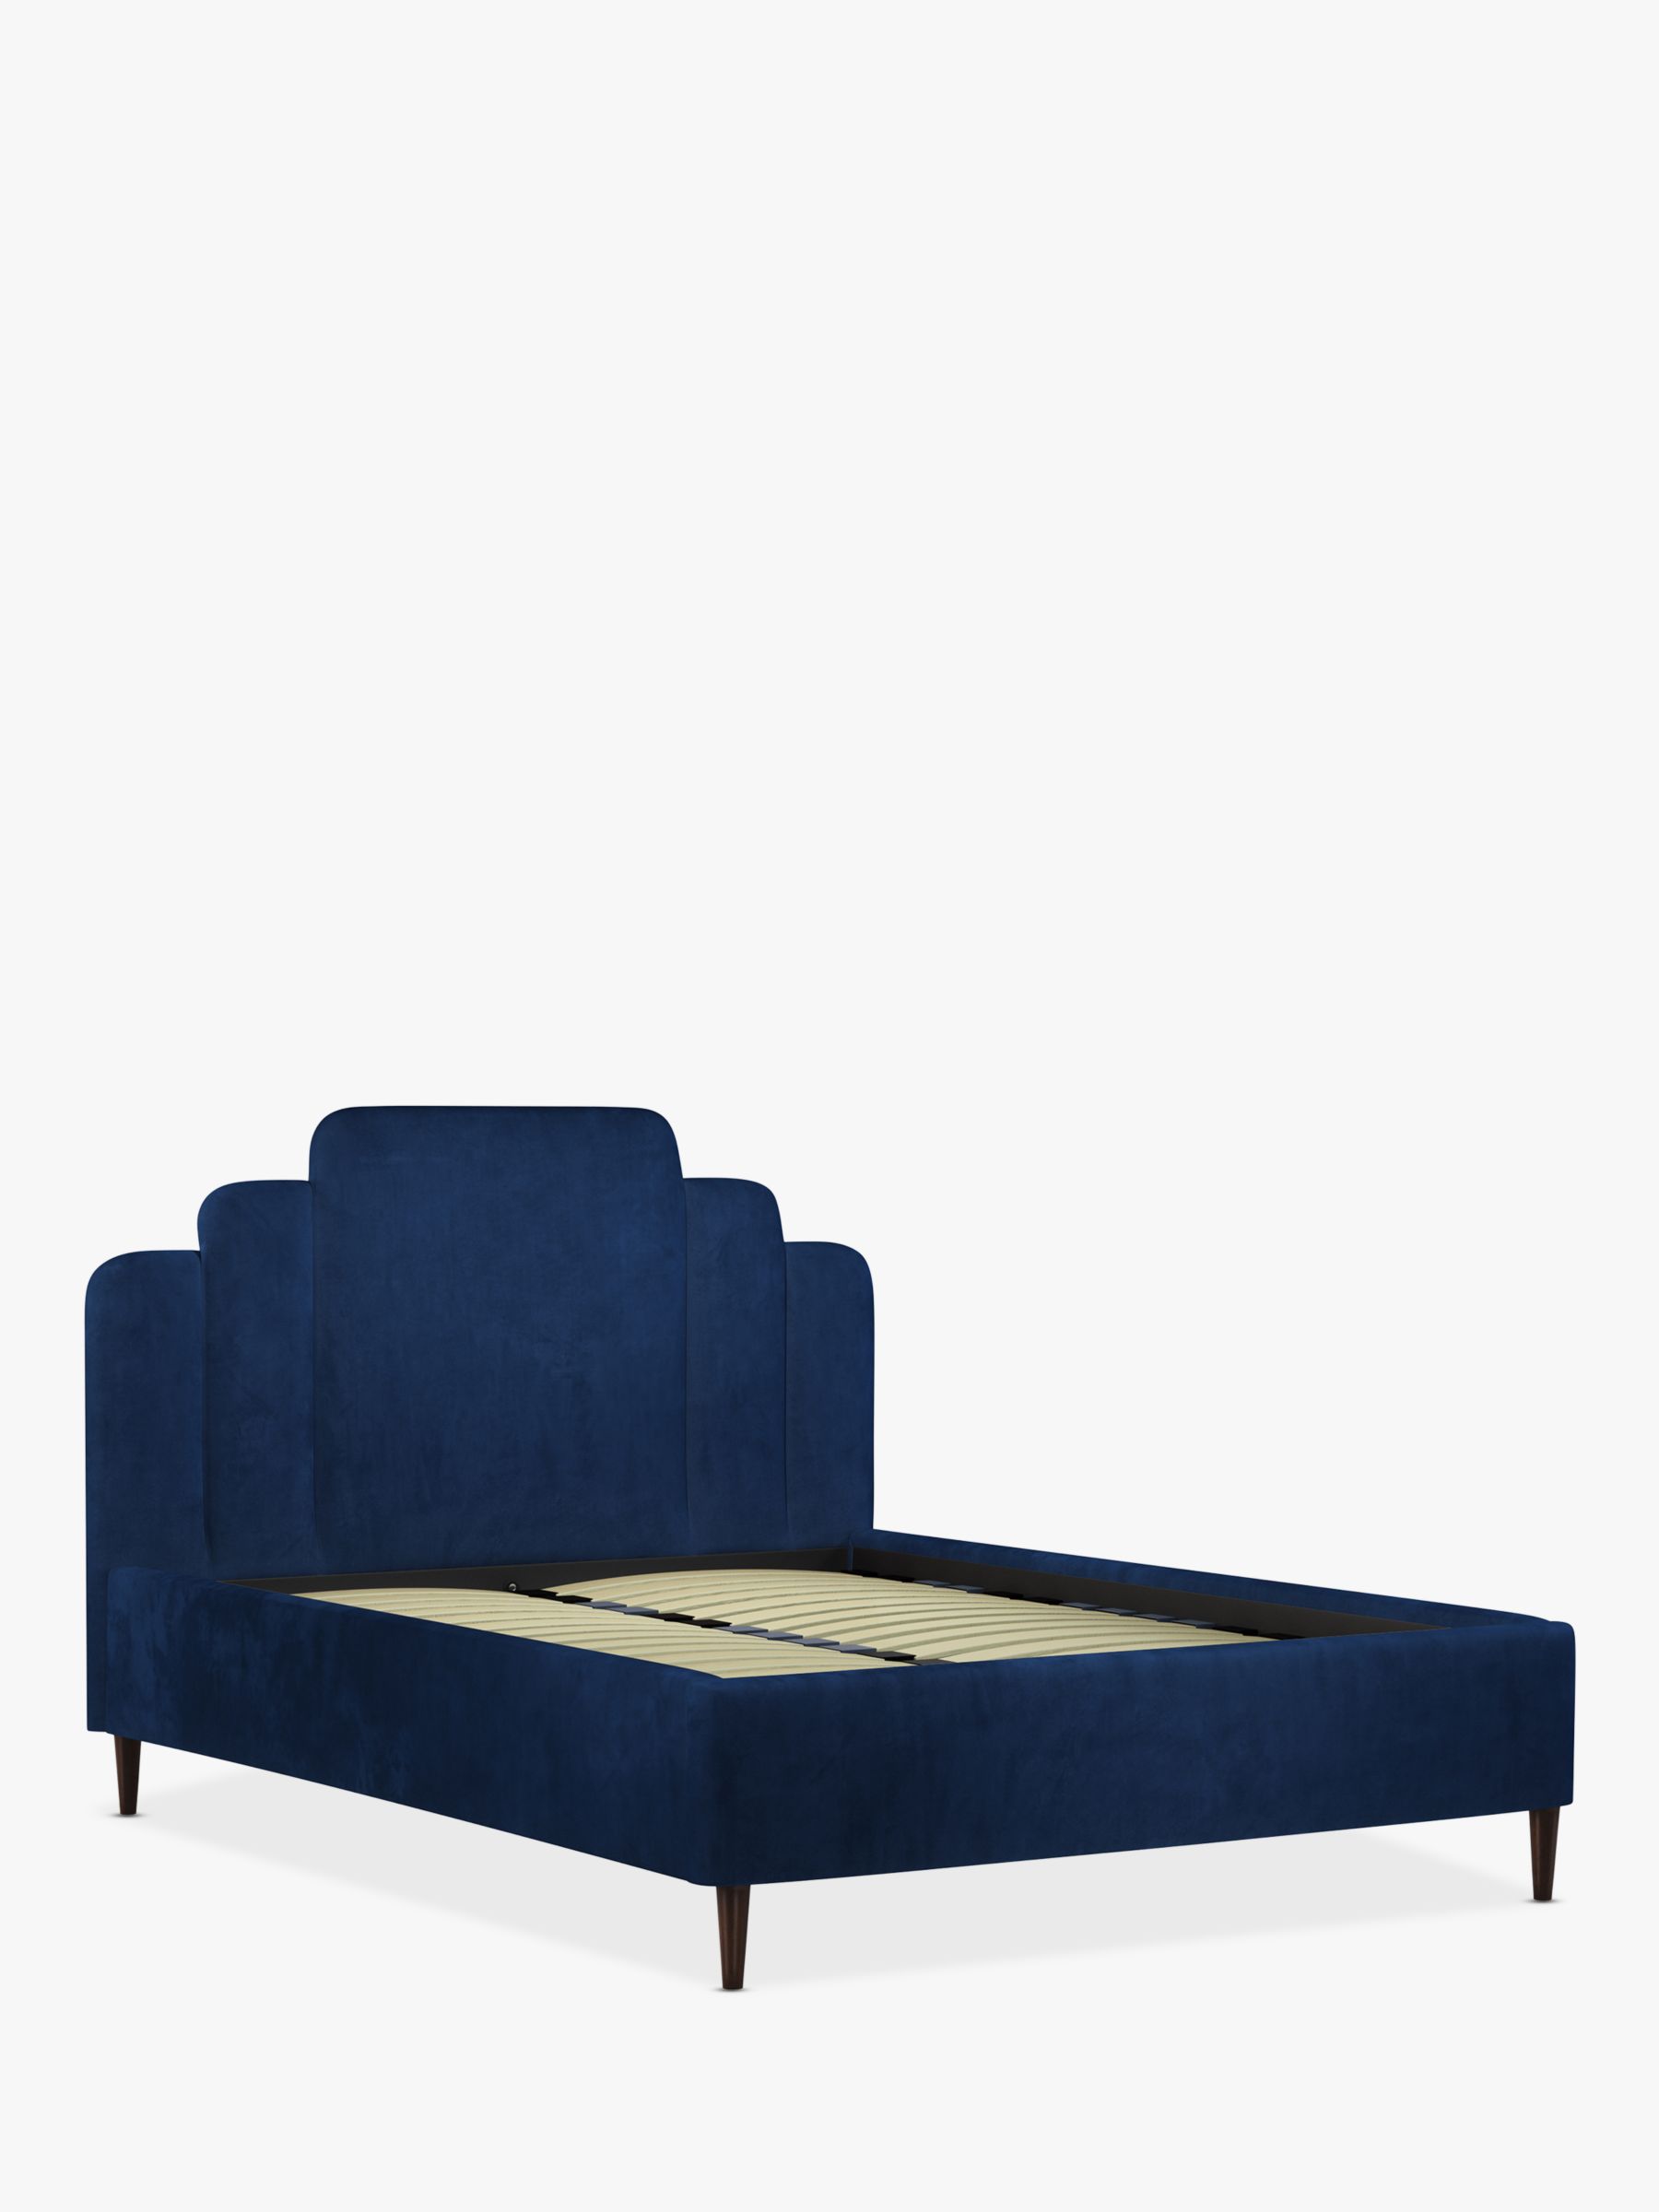 Photo of John lewis boutique upholstered bed frame king size